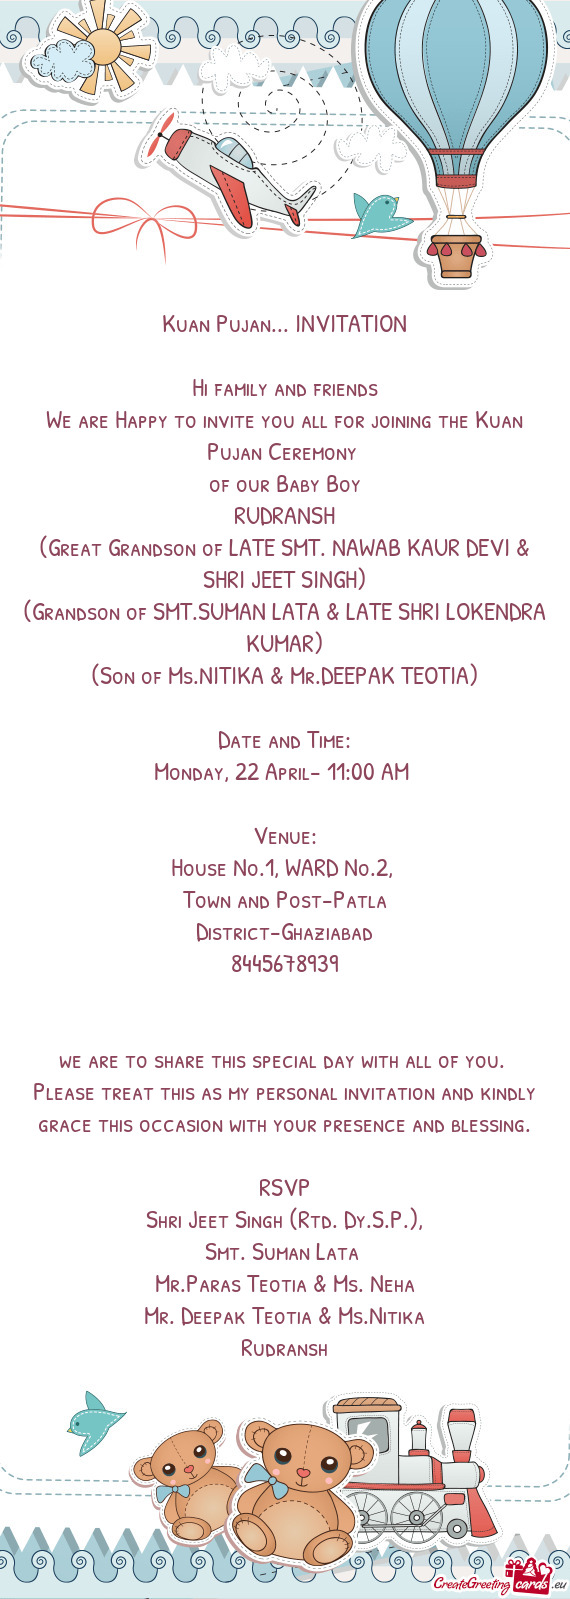 (Grandson of SMT.SUMAN LATA & LATE SHRI LOKENDRA KUMAR)